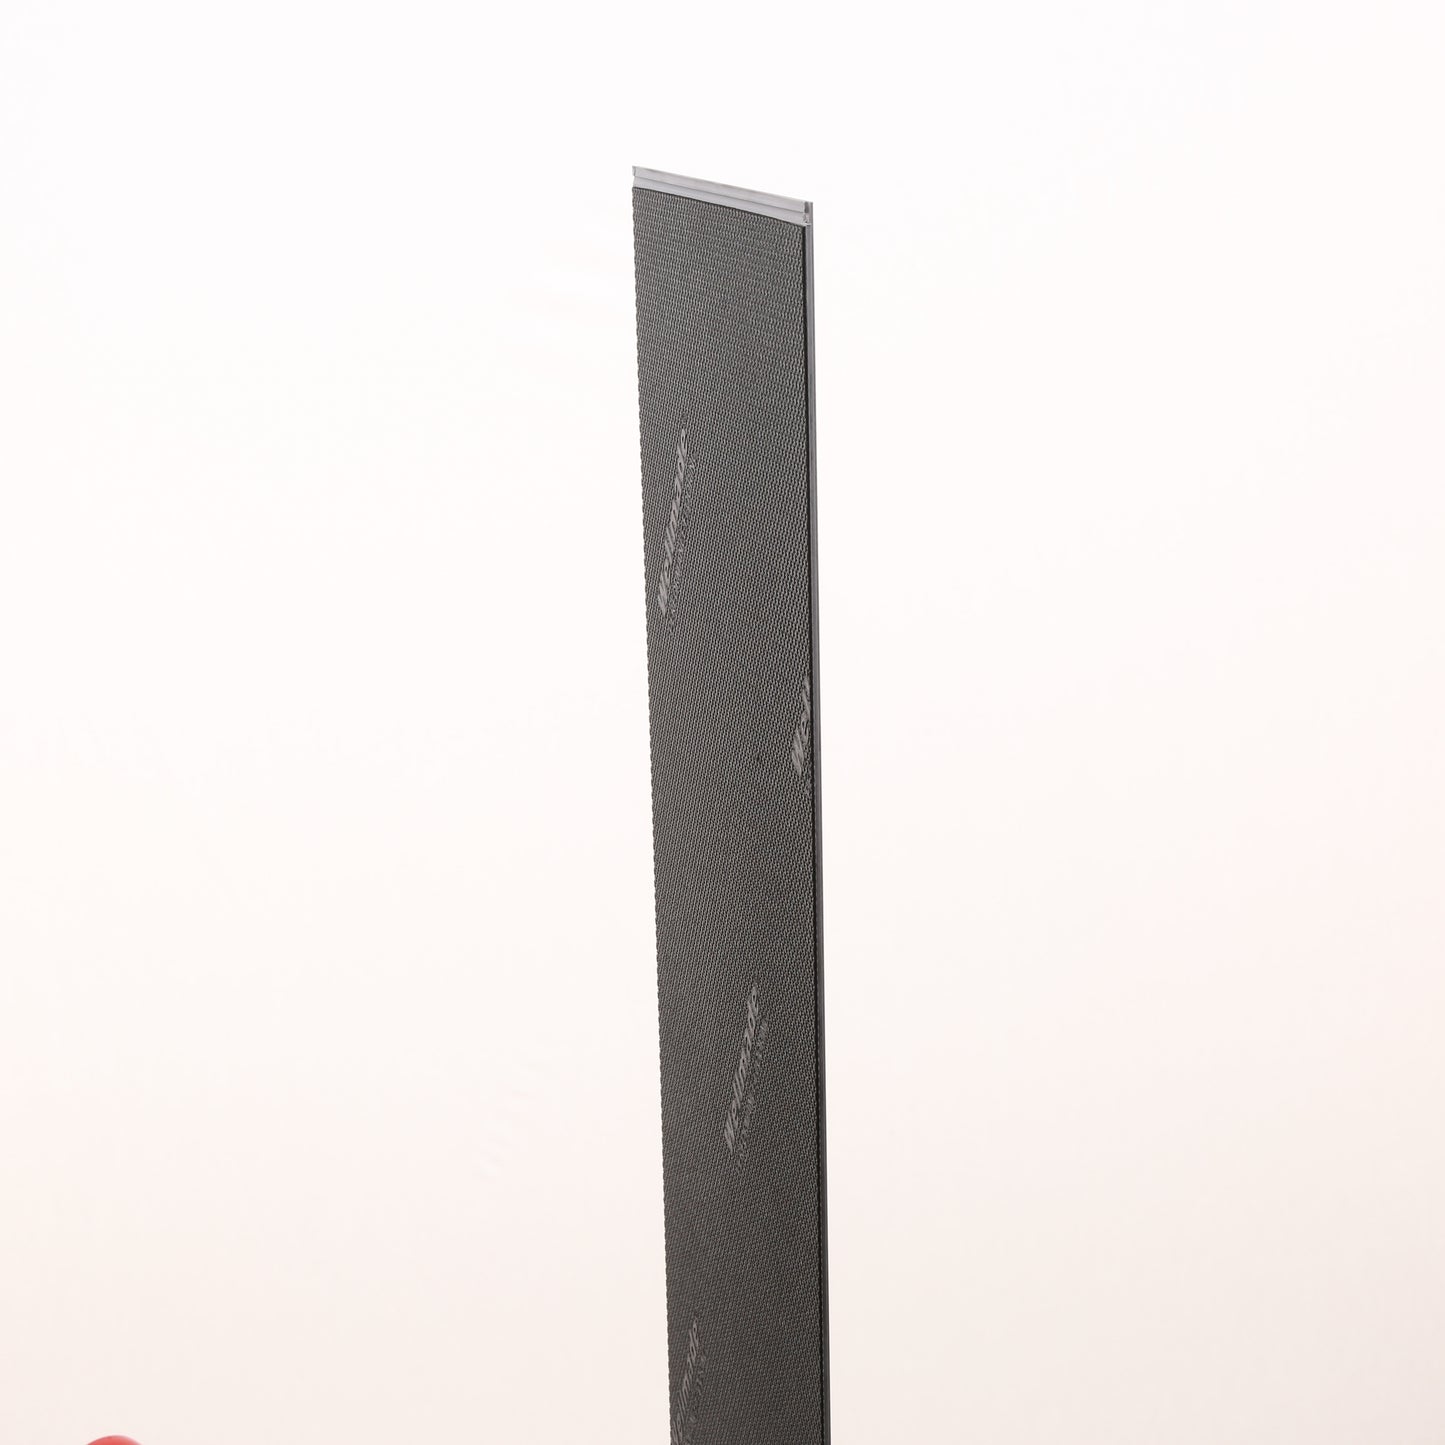 5mm Montgomery HDPC® Waterproof Luxury Vinyl Plank Flooring 7.20 in. Wide x 60 in. Long